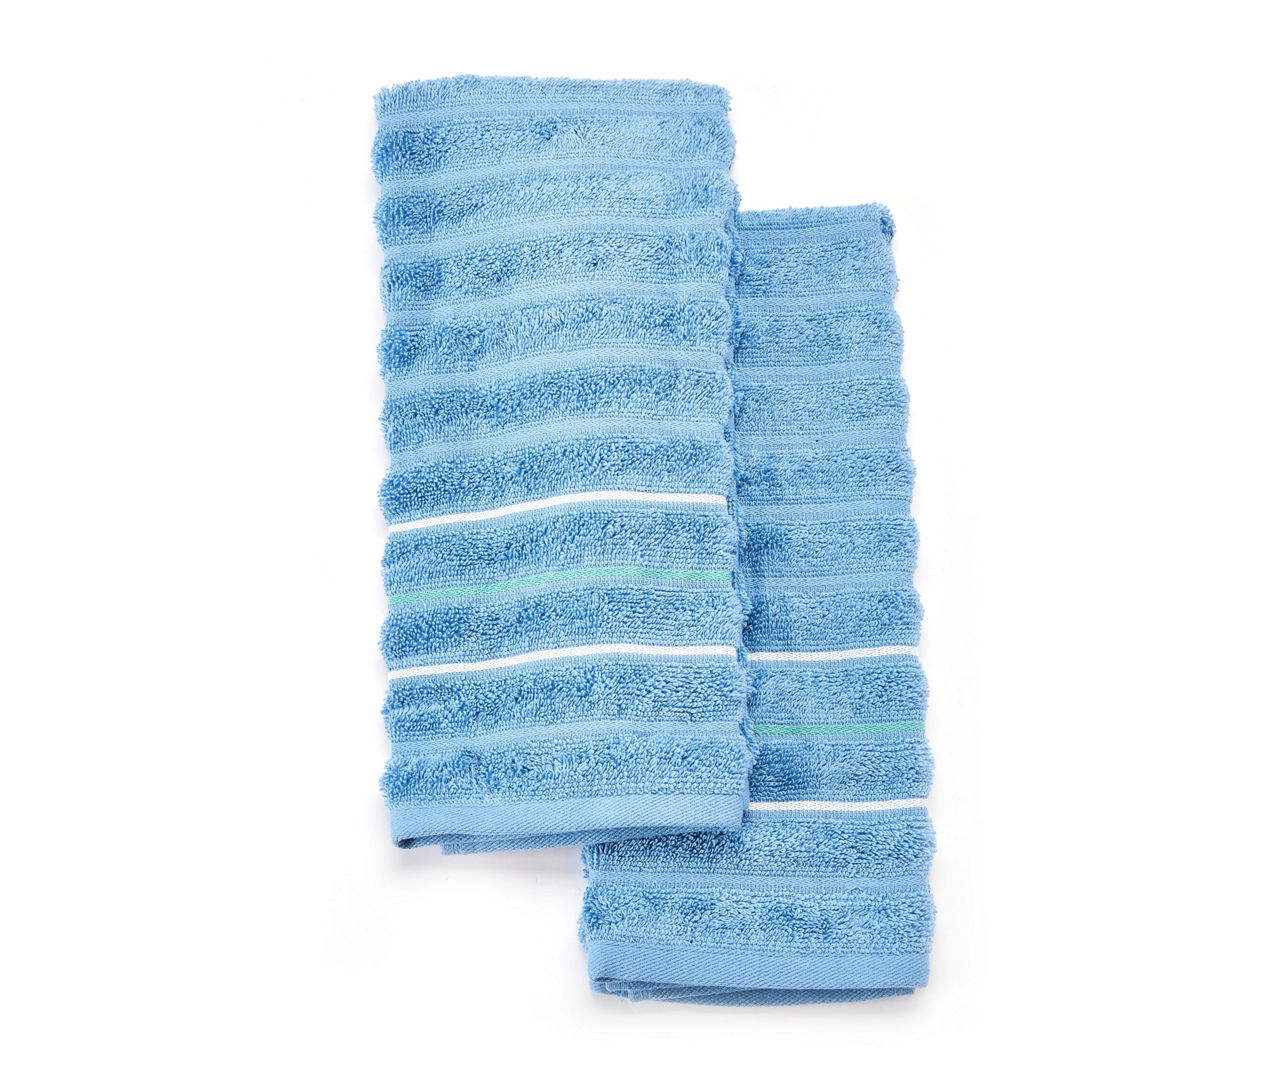 Somanic Blue & White Stripe Hand Towels, 2-Pack